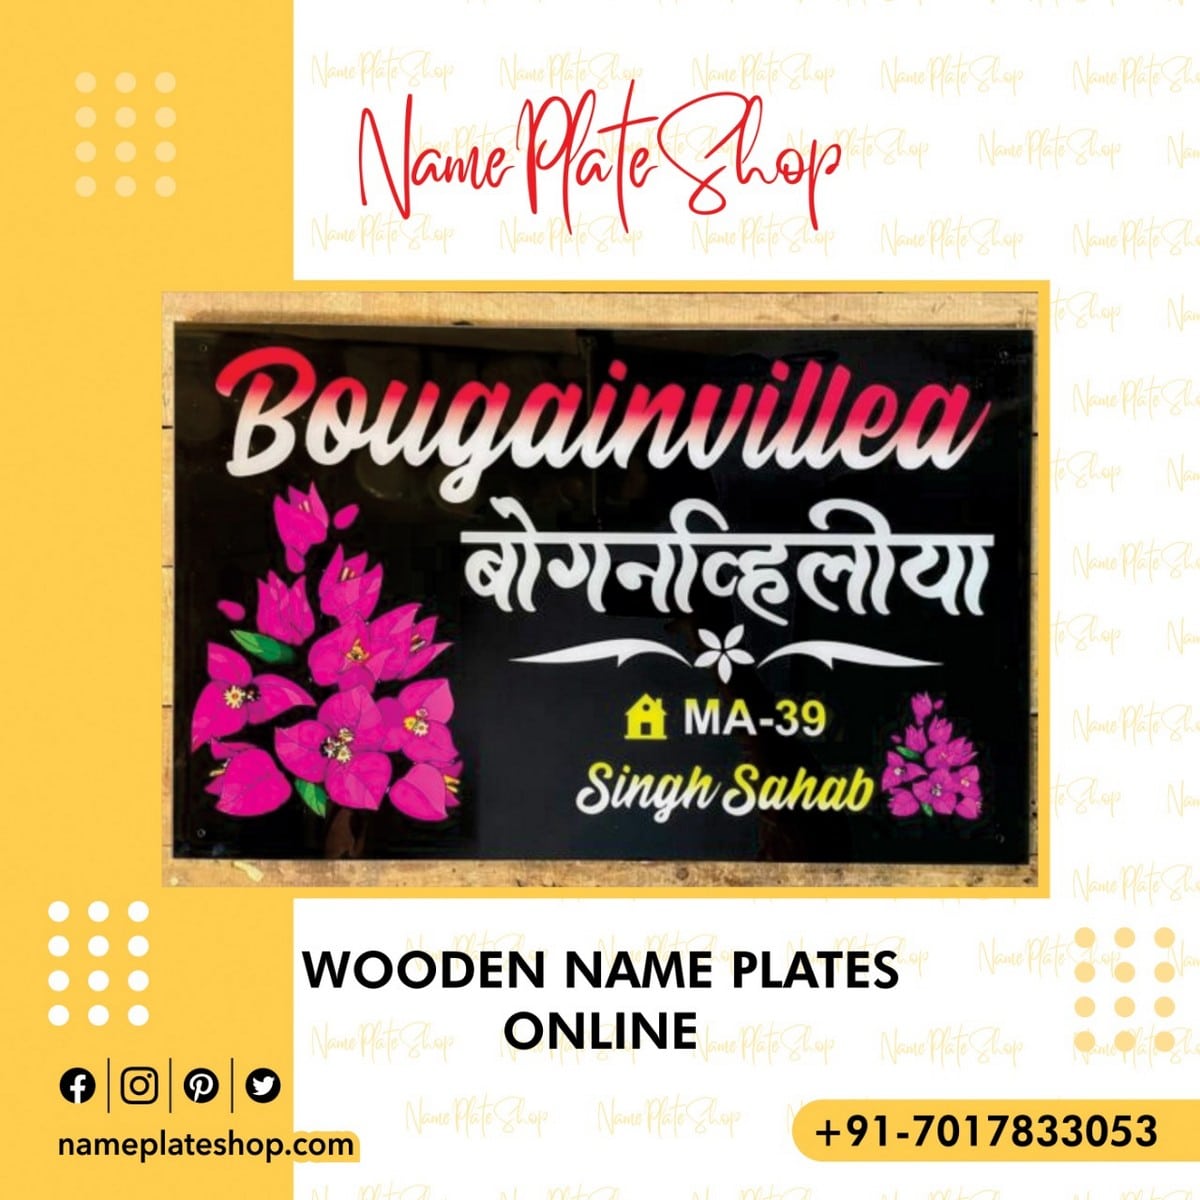 Wooden Name Plates Available Online On Nameplateshopcom